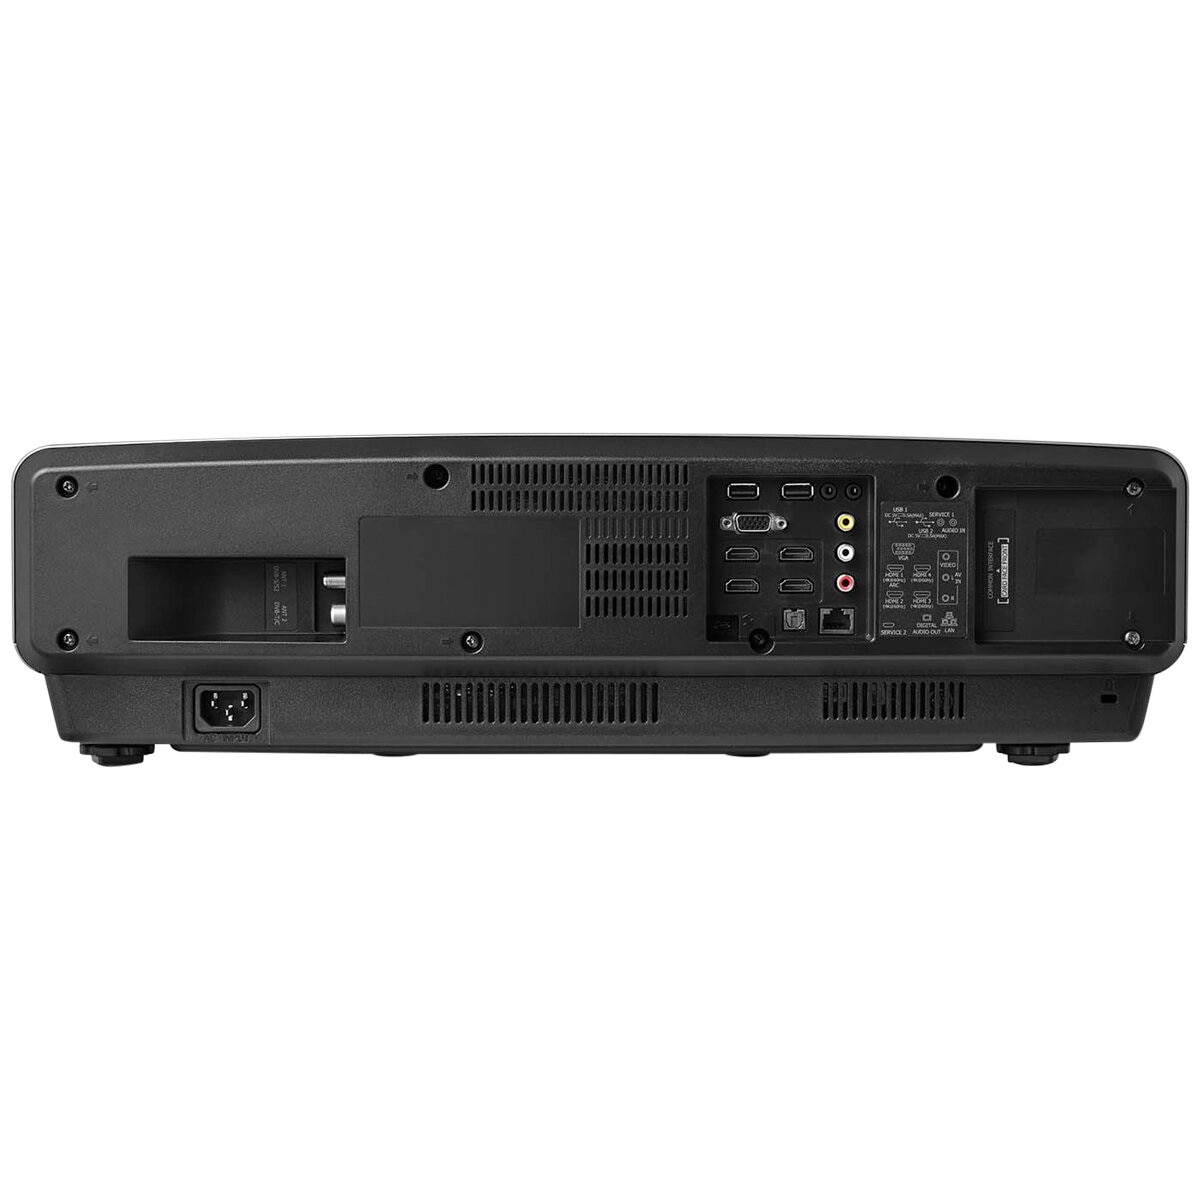 Hisense 120 Inch 4K Laser TV 120L5FSET